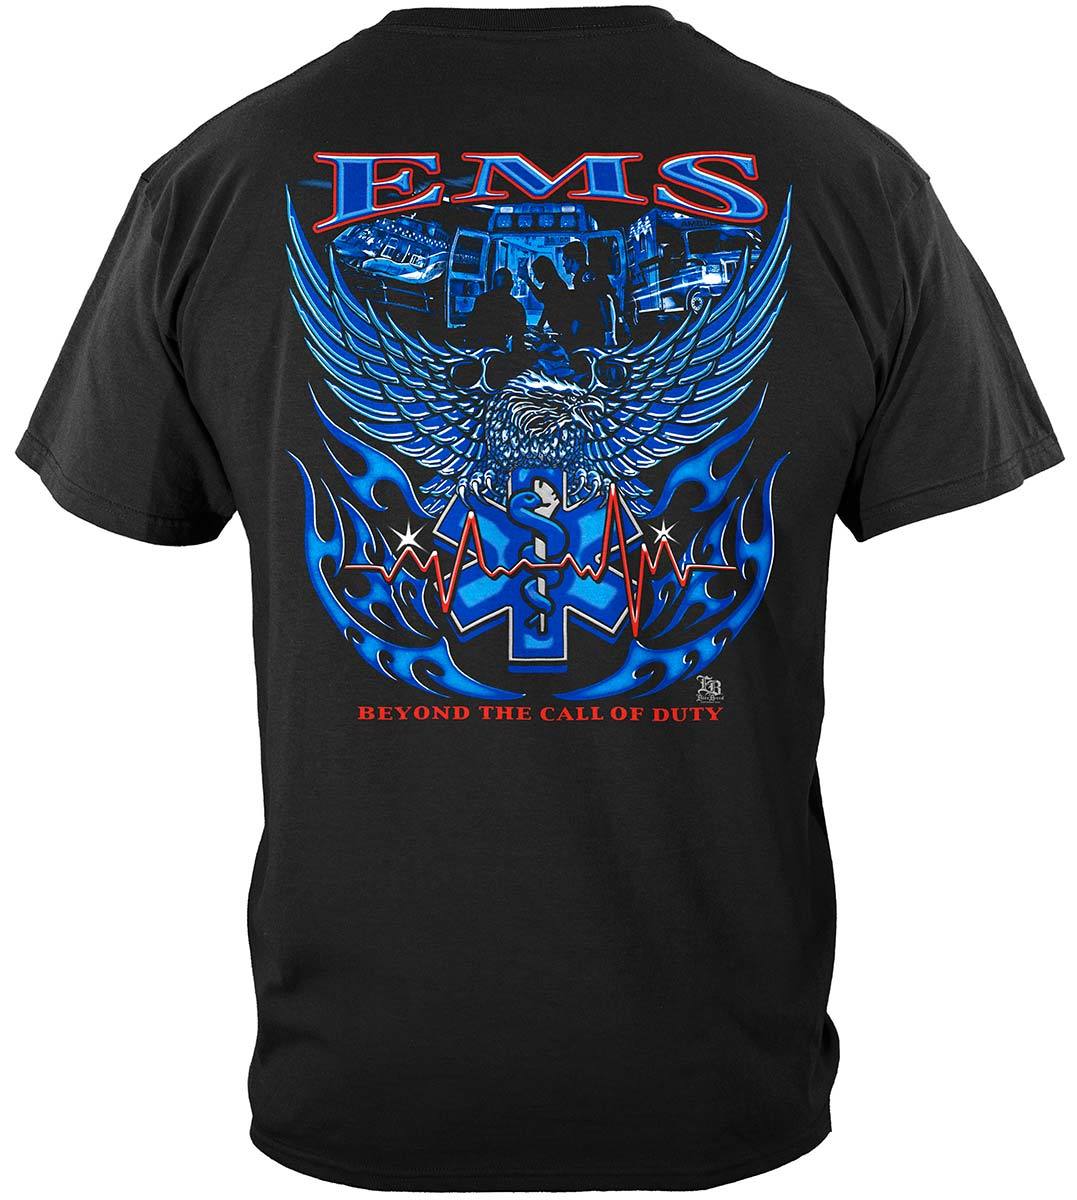 Elite Breed EMS Eagle Premium Hooded Sweat Shirt